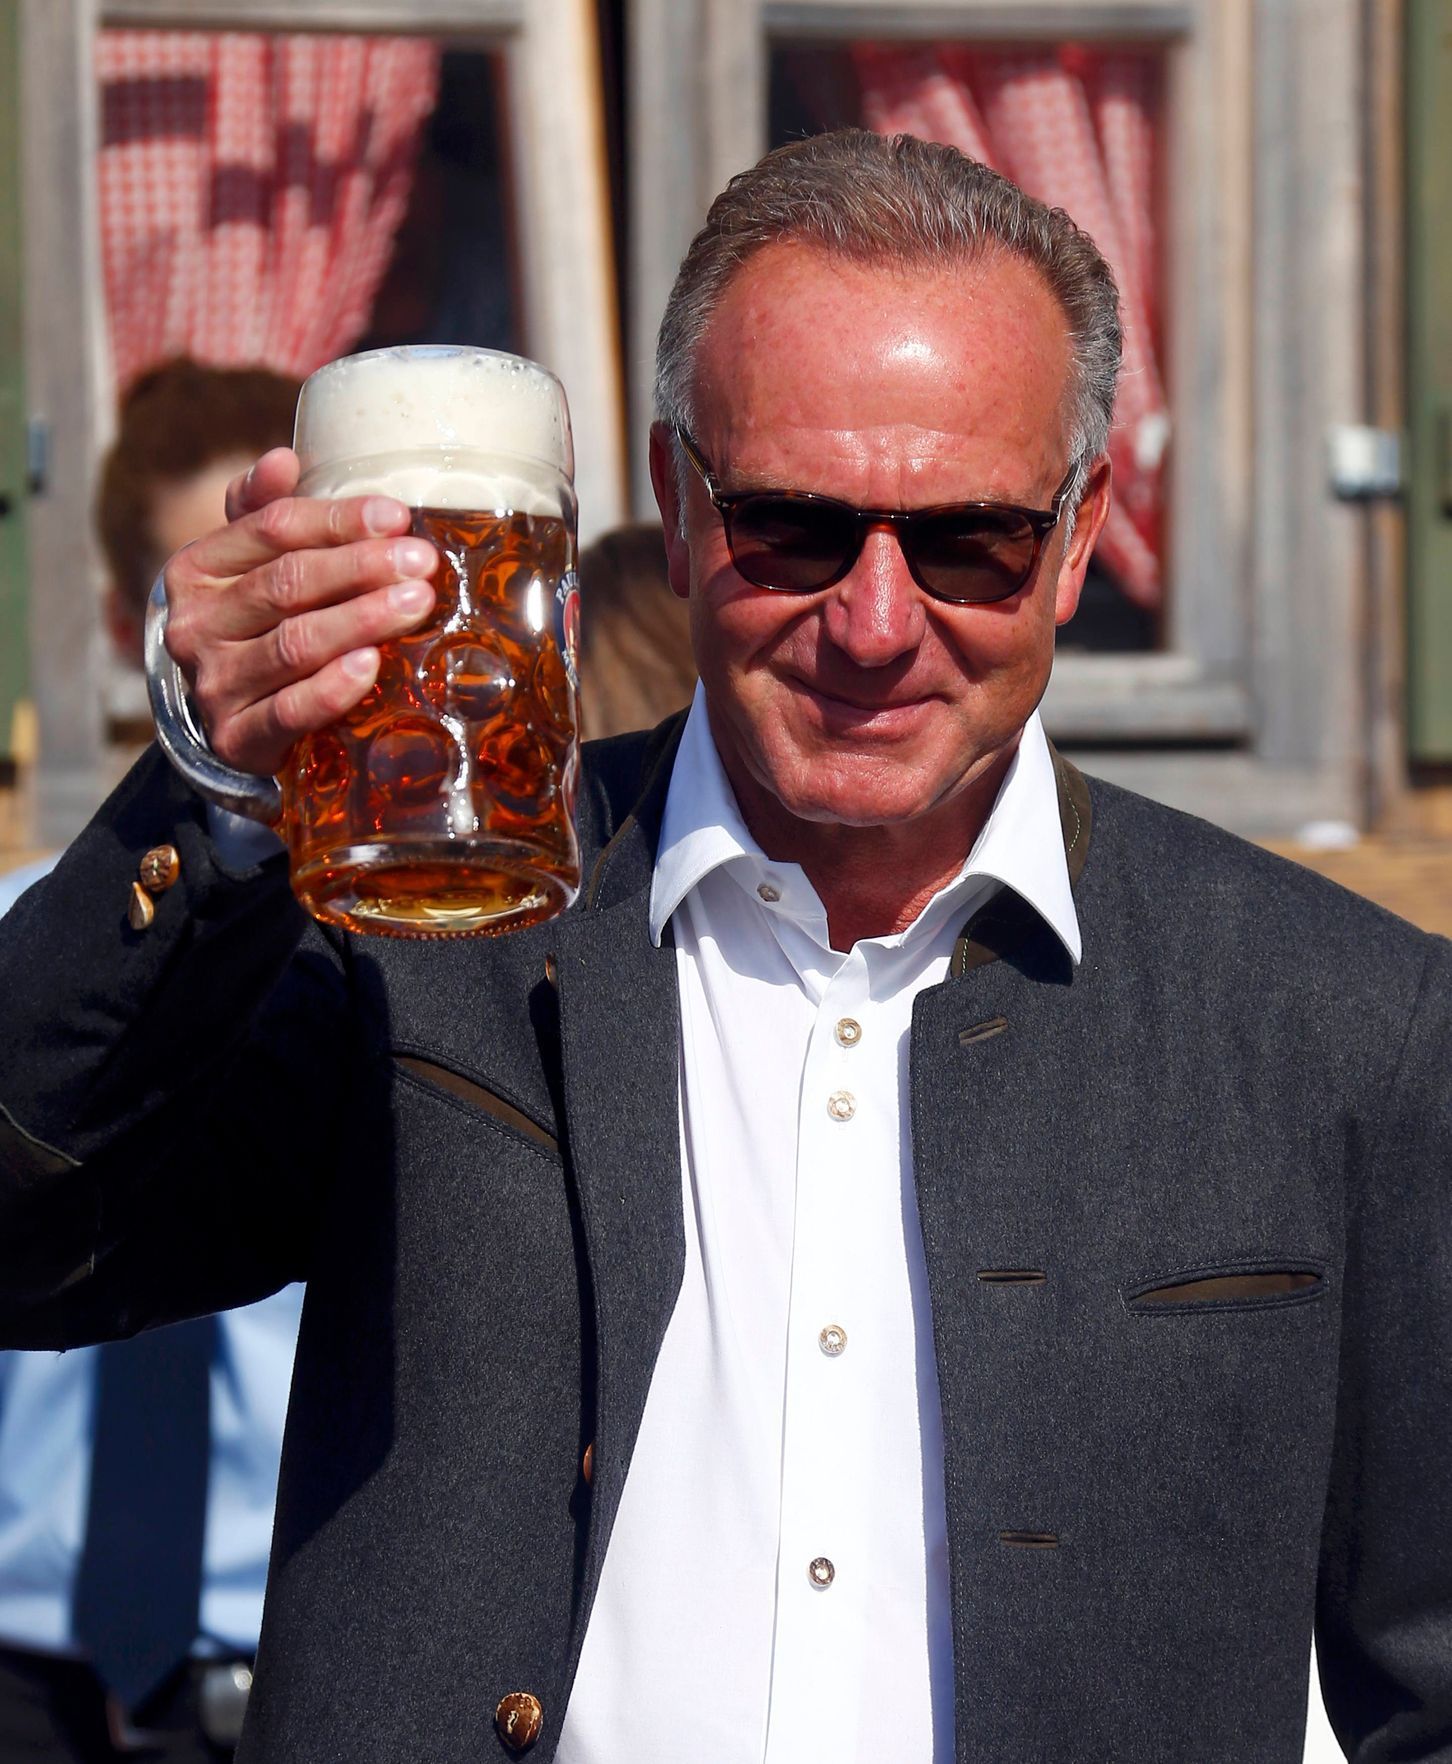 Bayern Mnichov na Oktoberfestu 2015: Karl-Heinz Rummenigge